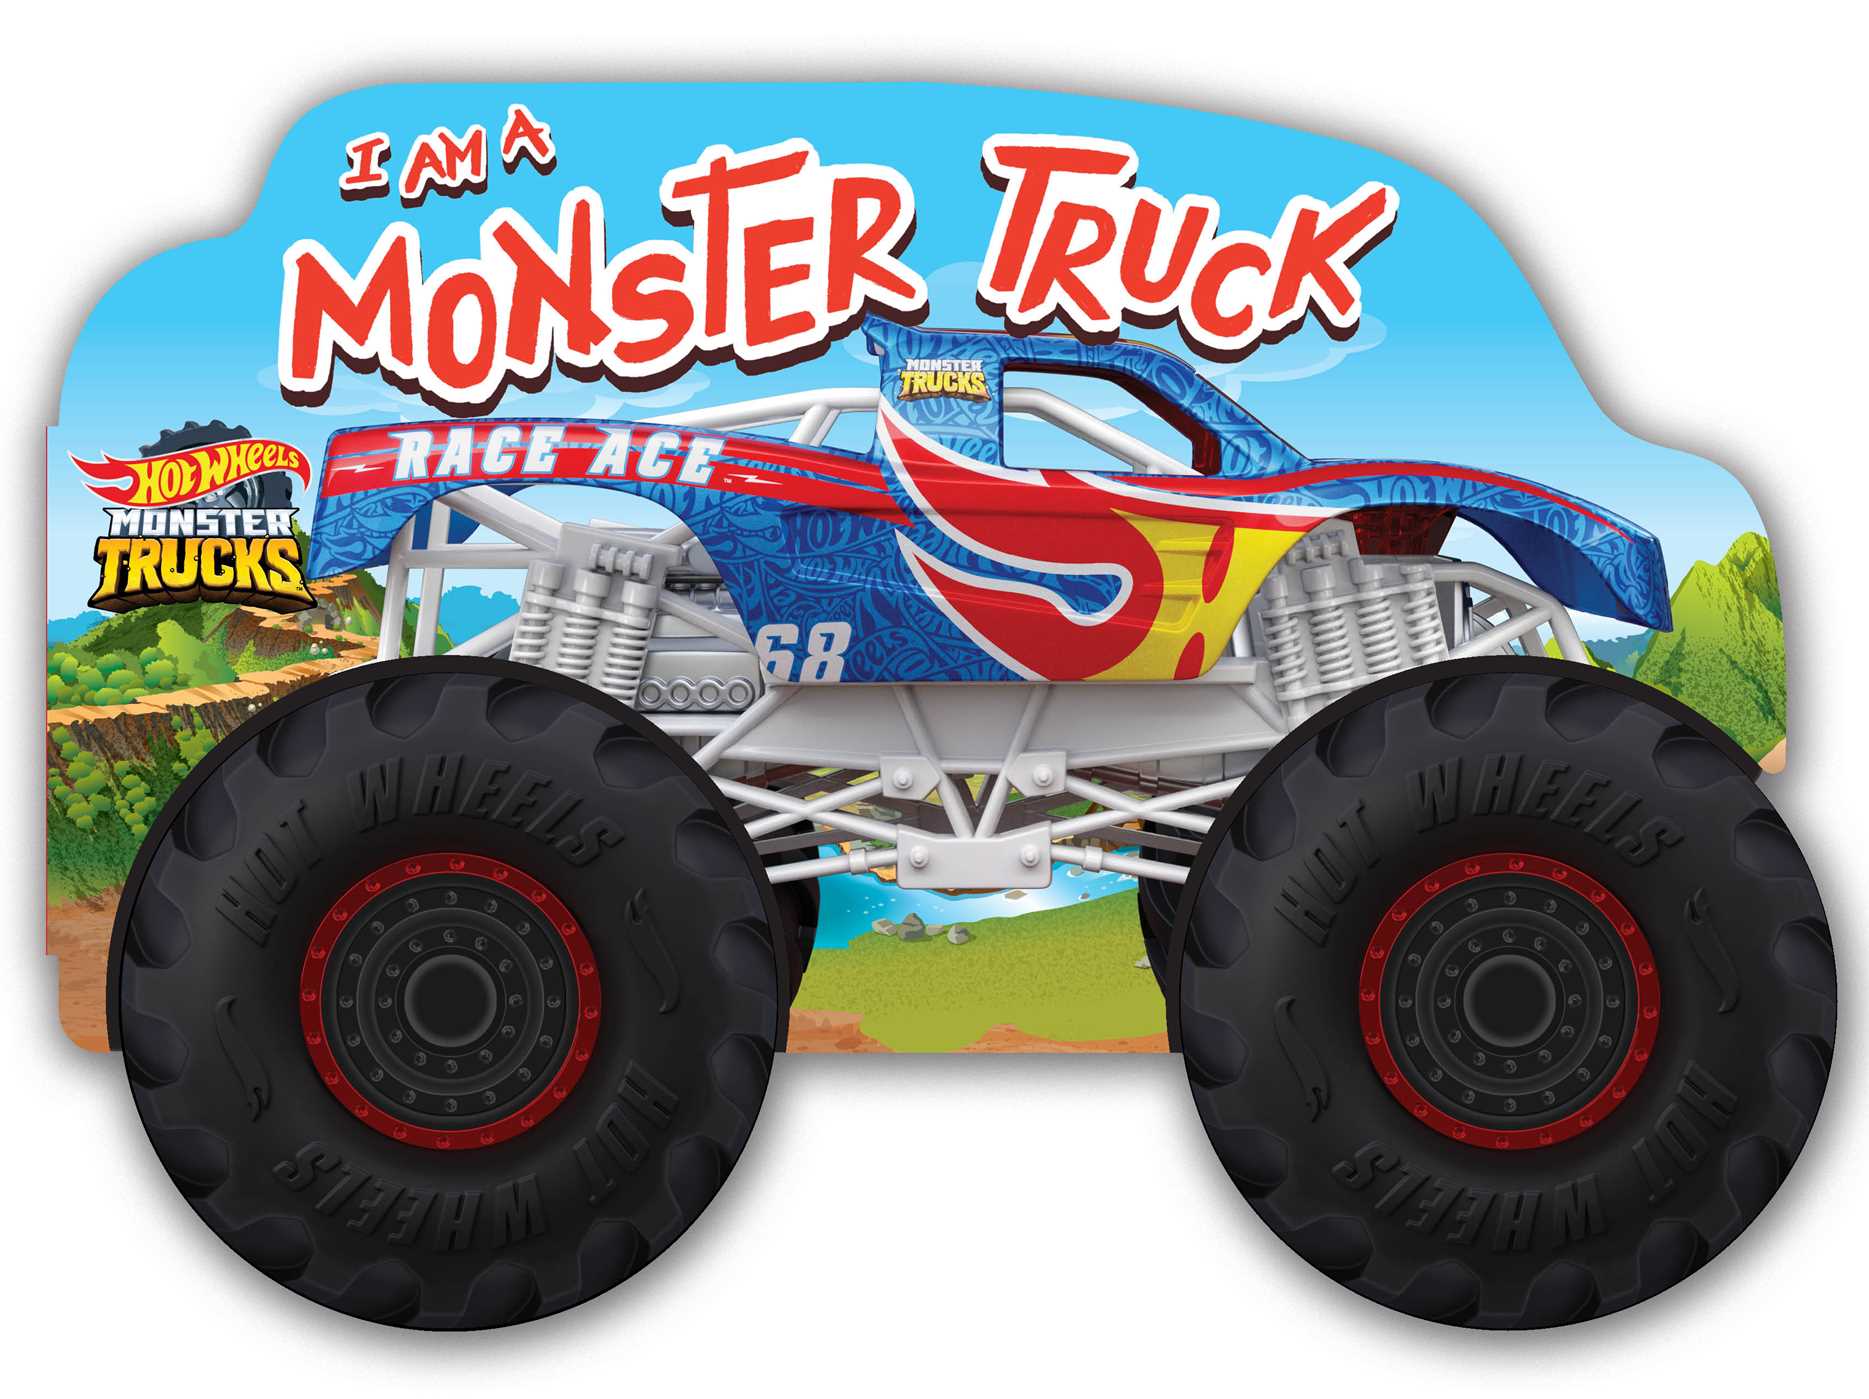 Hot Wheels: I Am A Monster Truck book cover